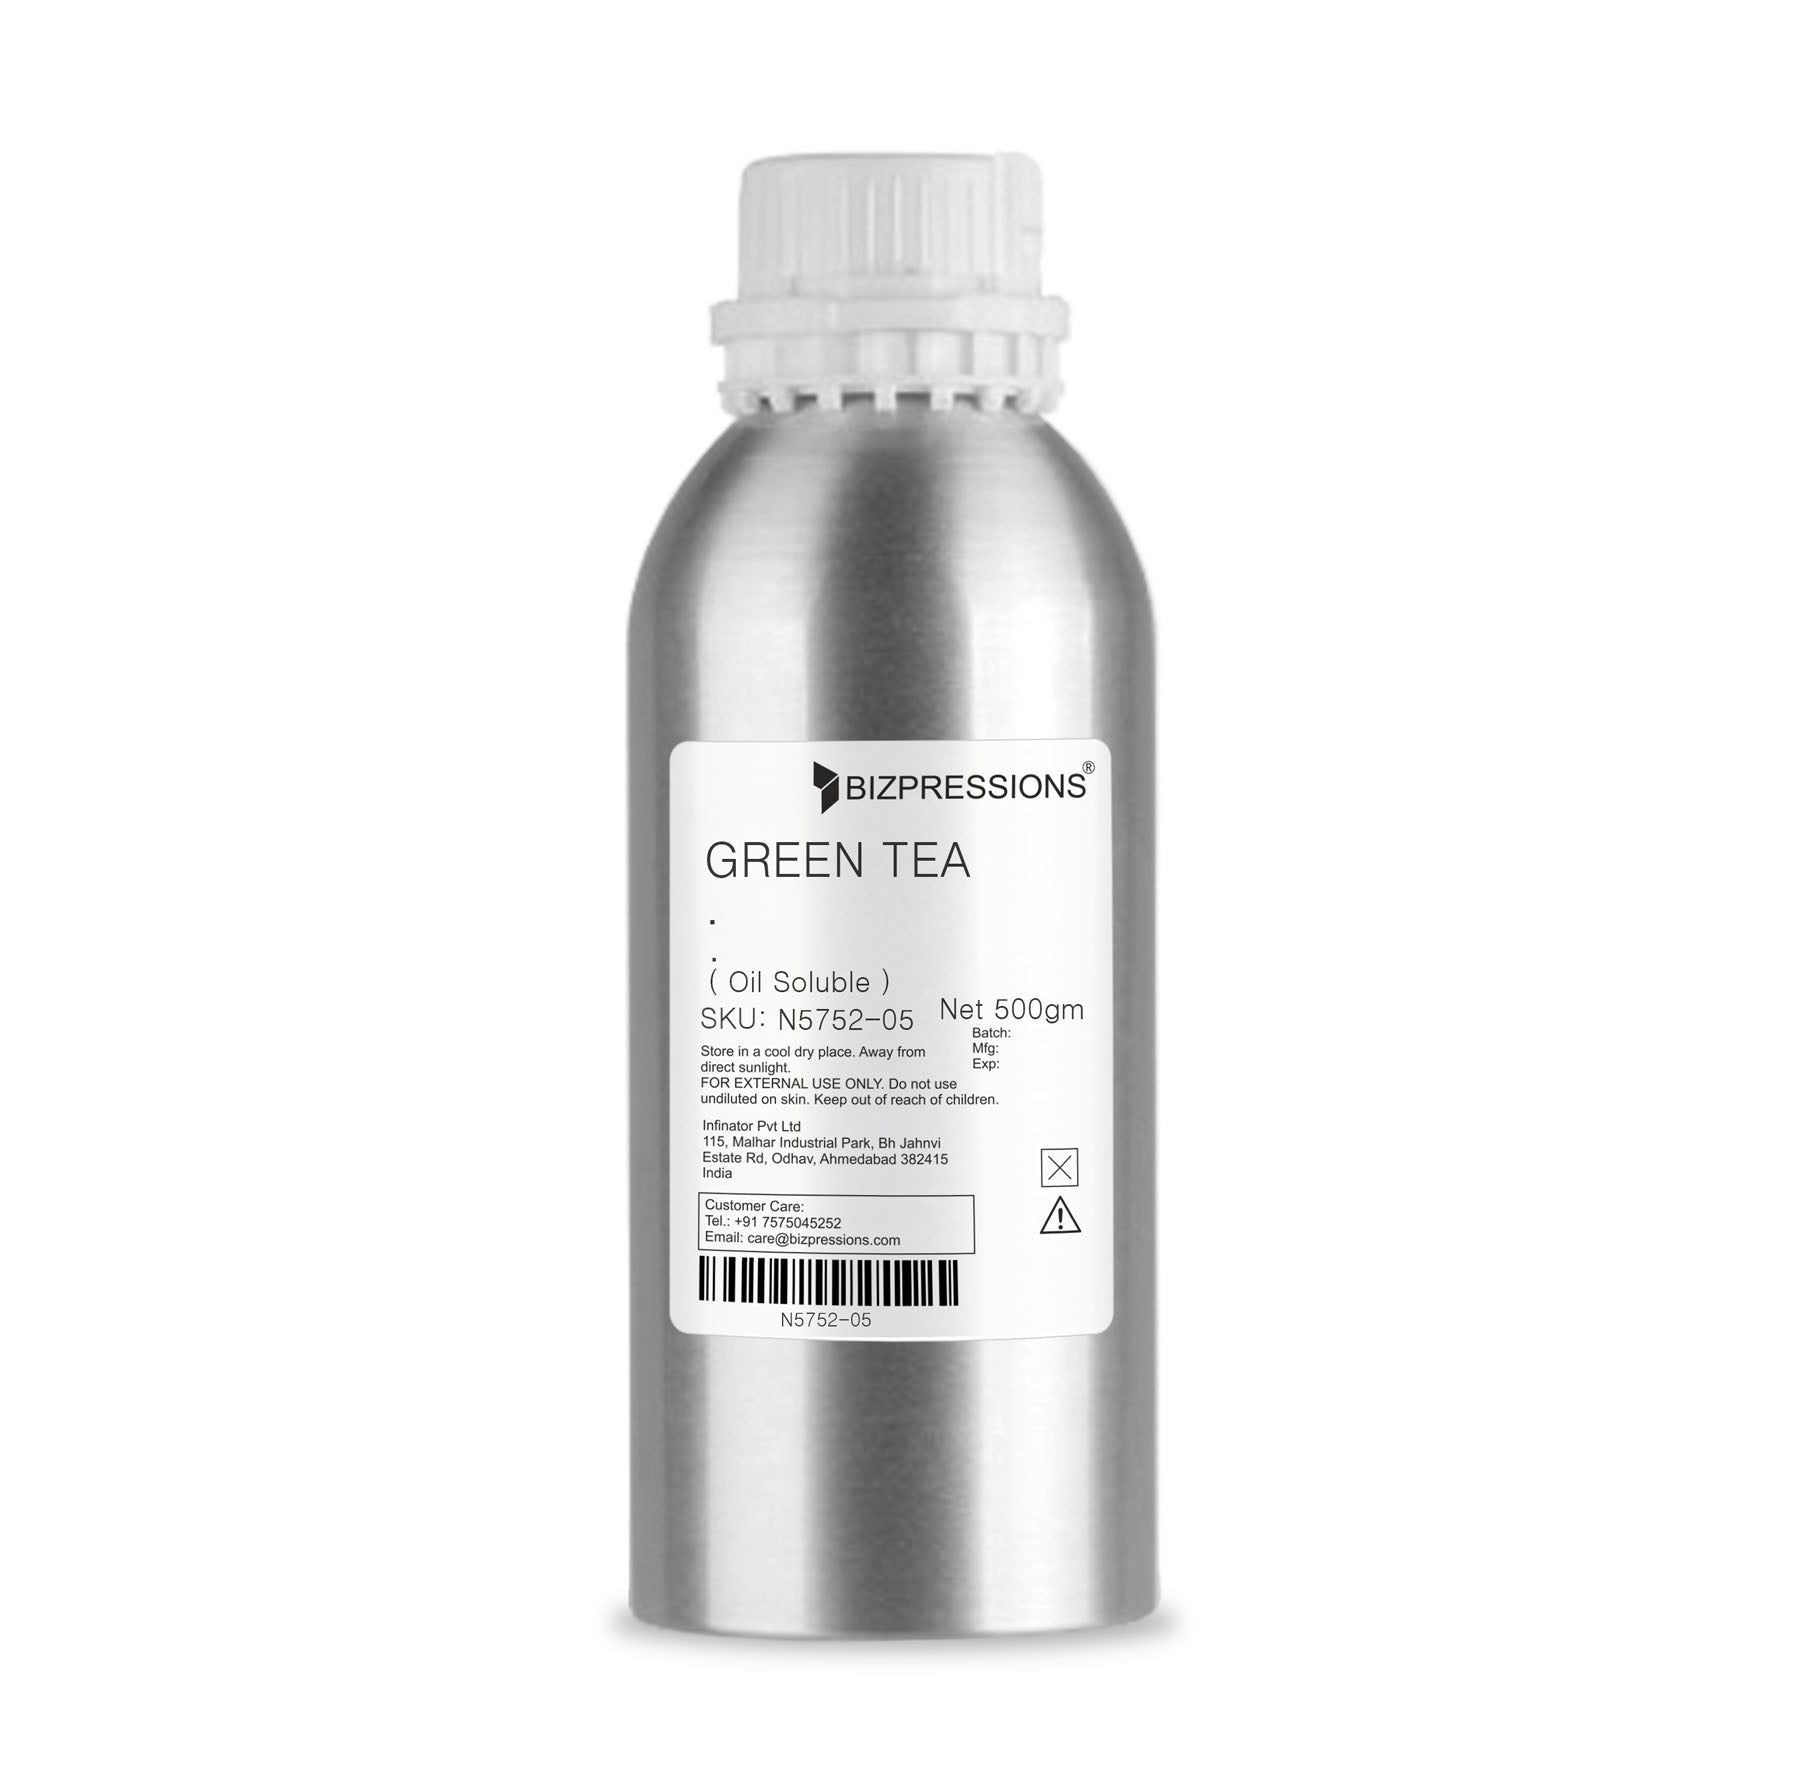 GREEN TEA - Fragrance ( Oil Soluble ) - 500 gm